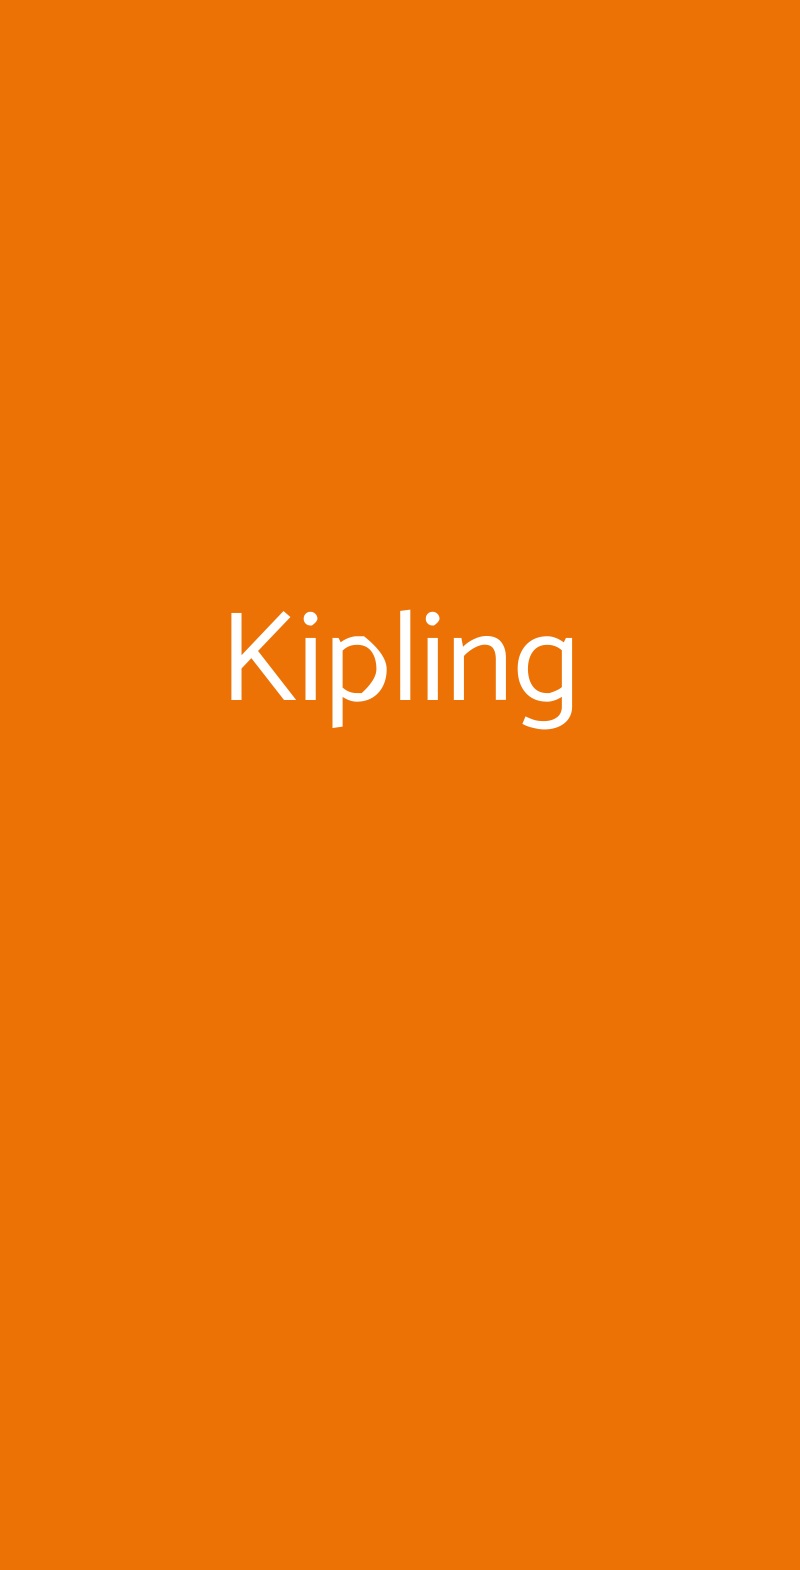 Kipling Torino menù 1 pagina